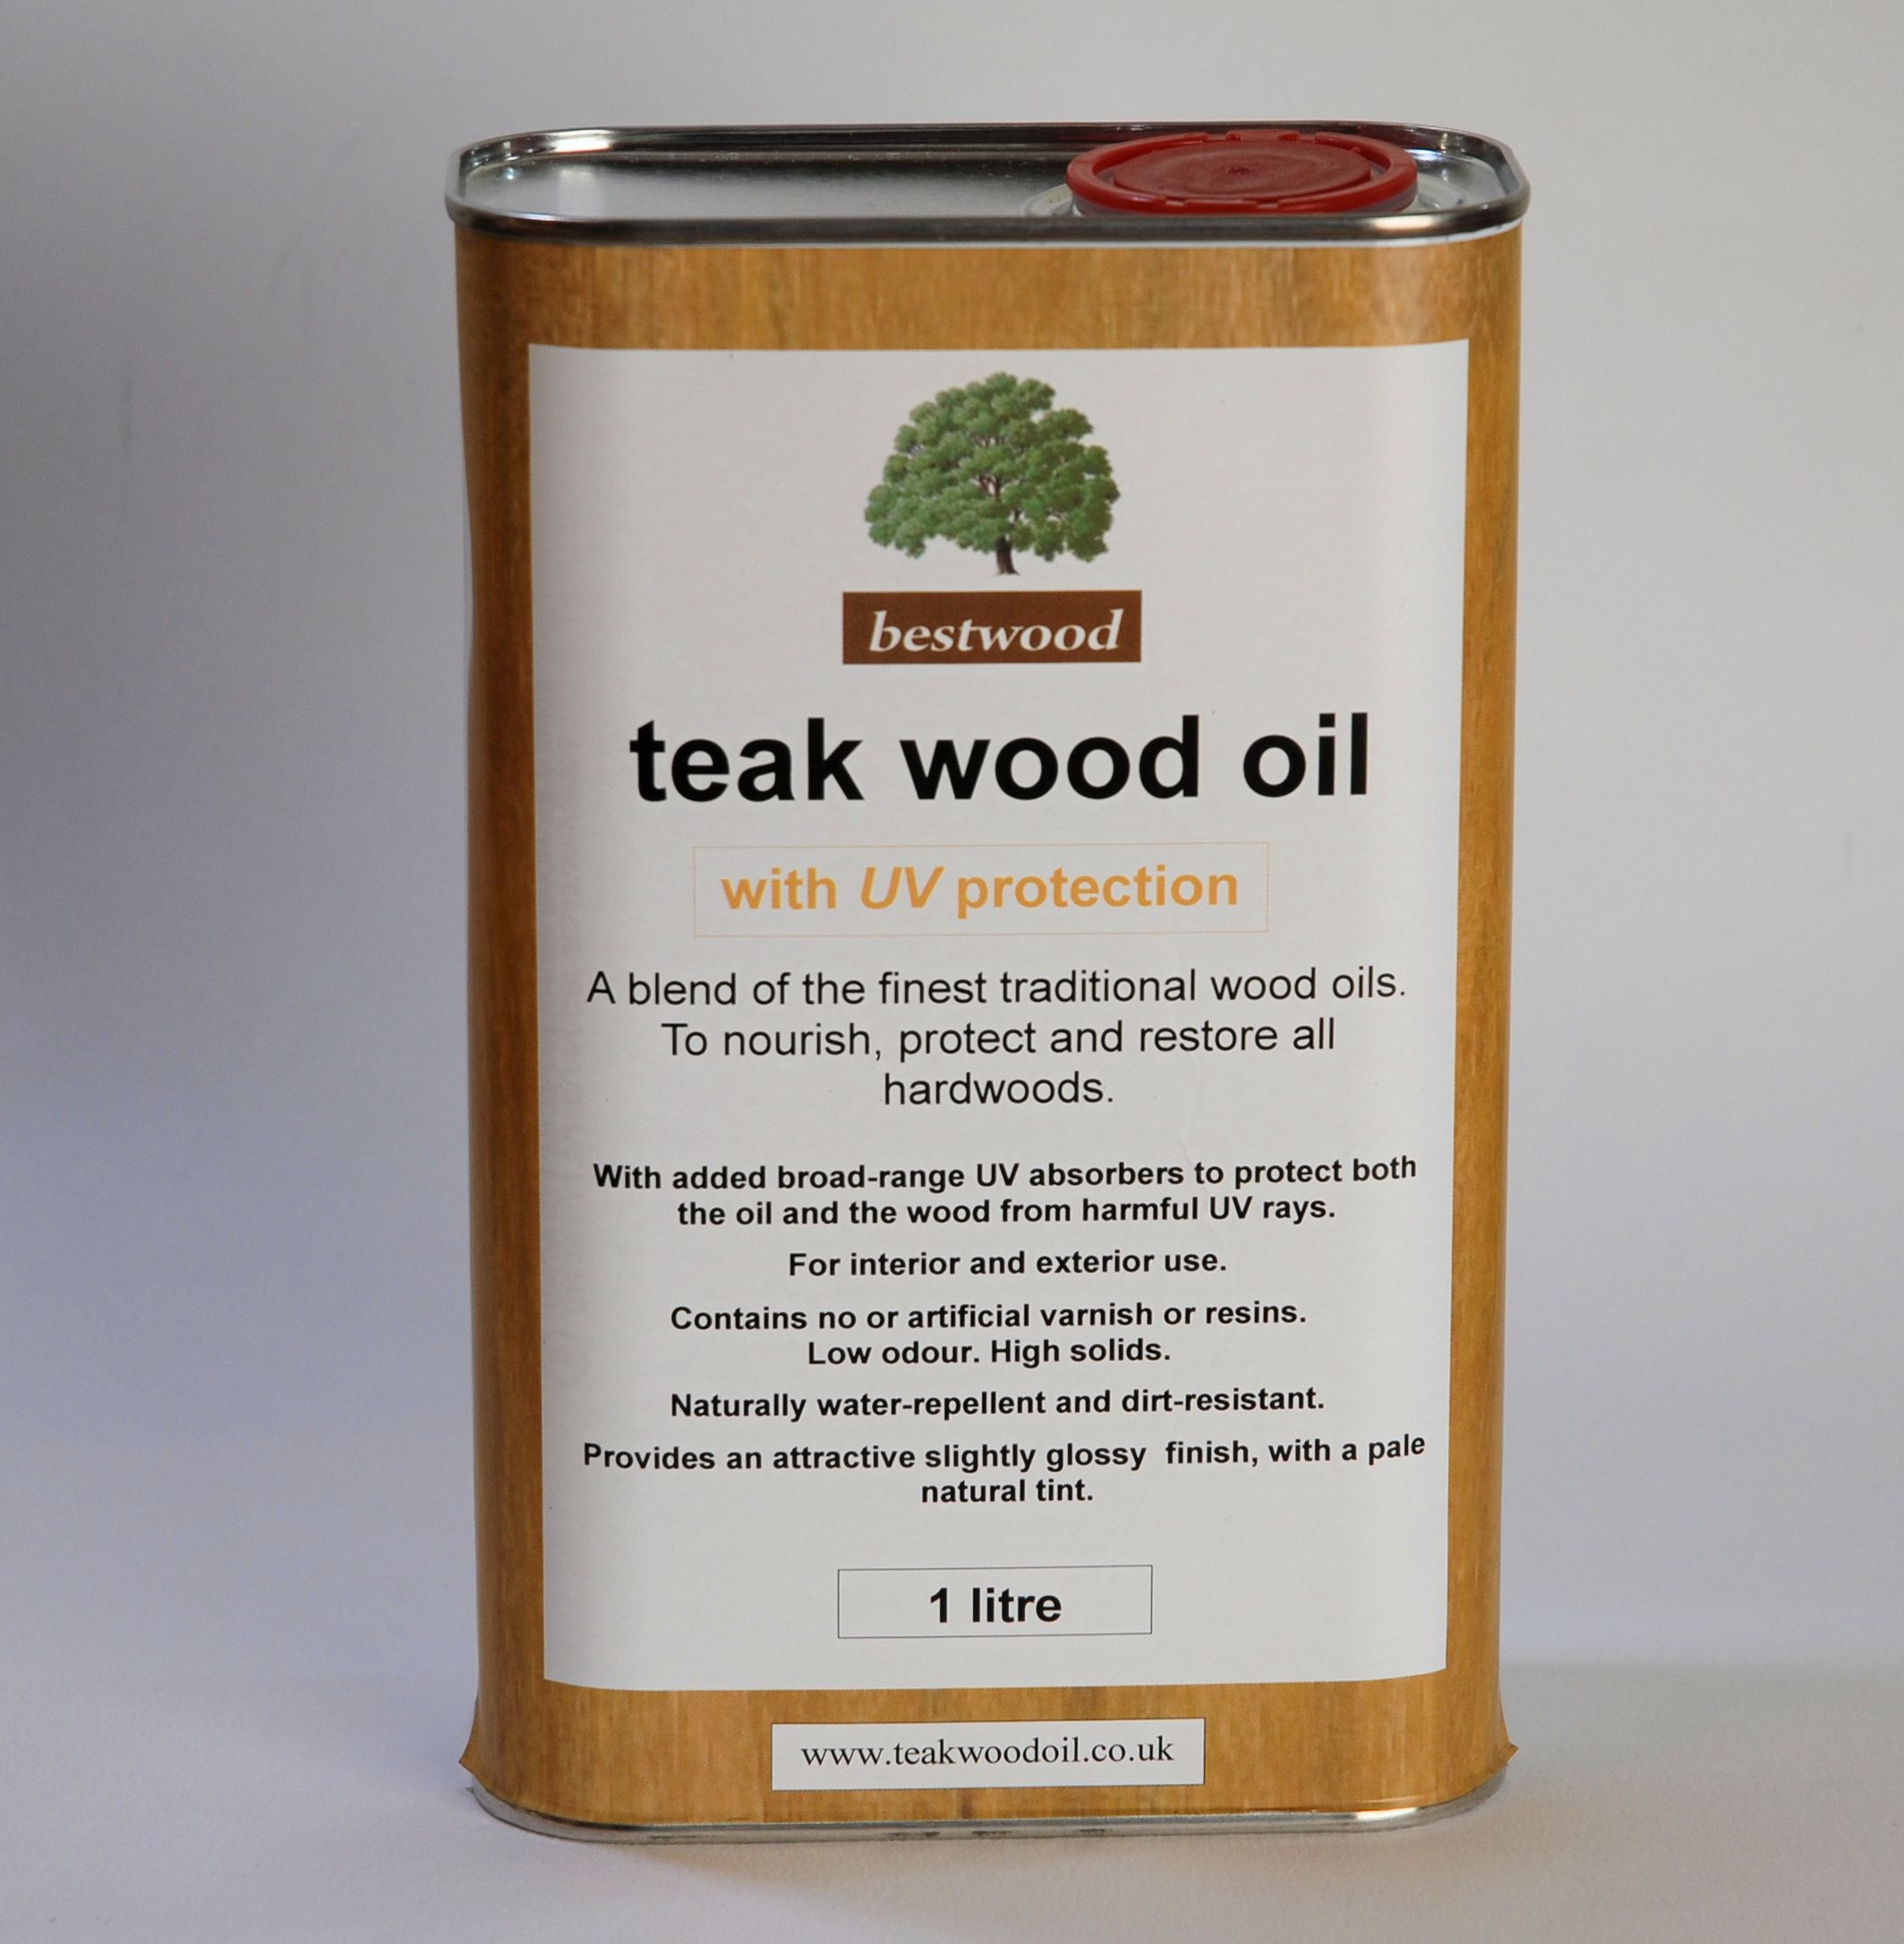 Bestwood Teak Wood Oil, UV, 1 Litre  tungoil.co.uktungoil 